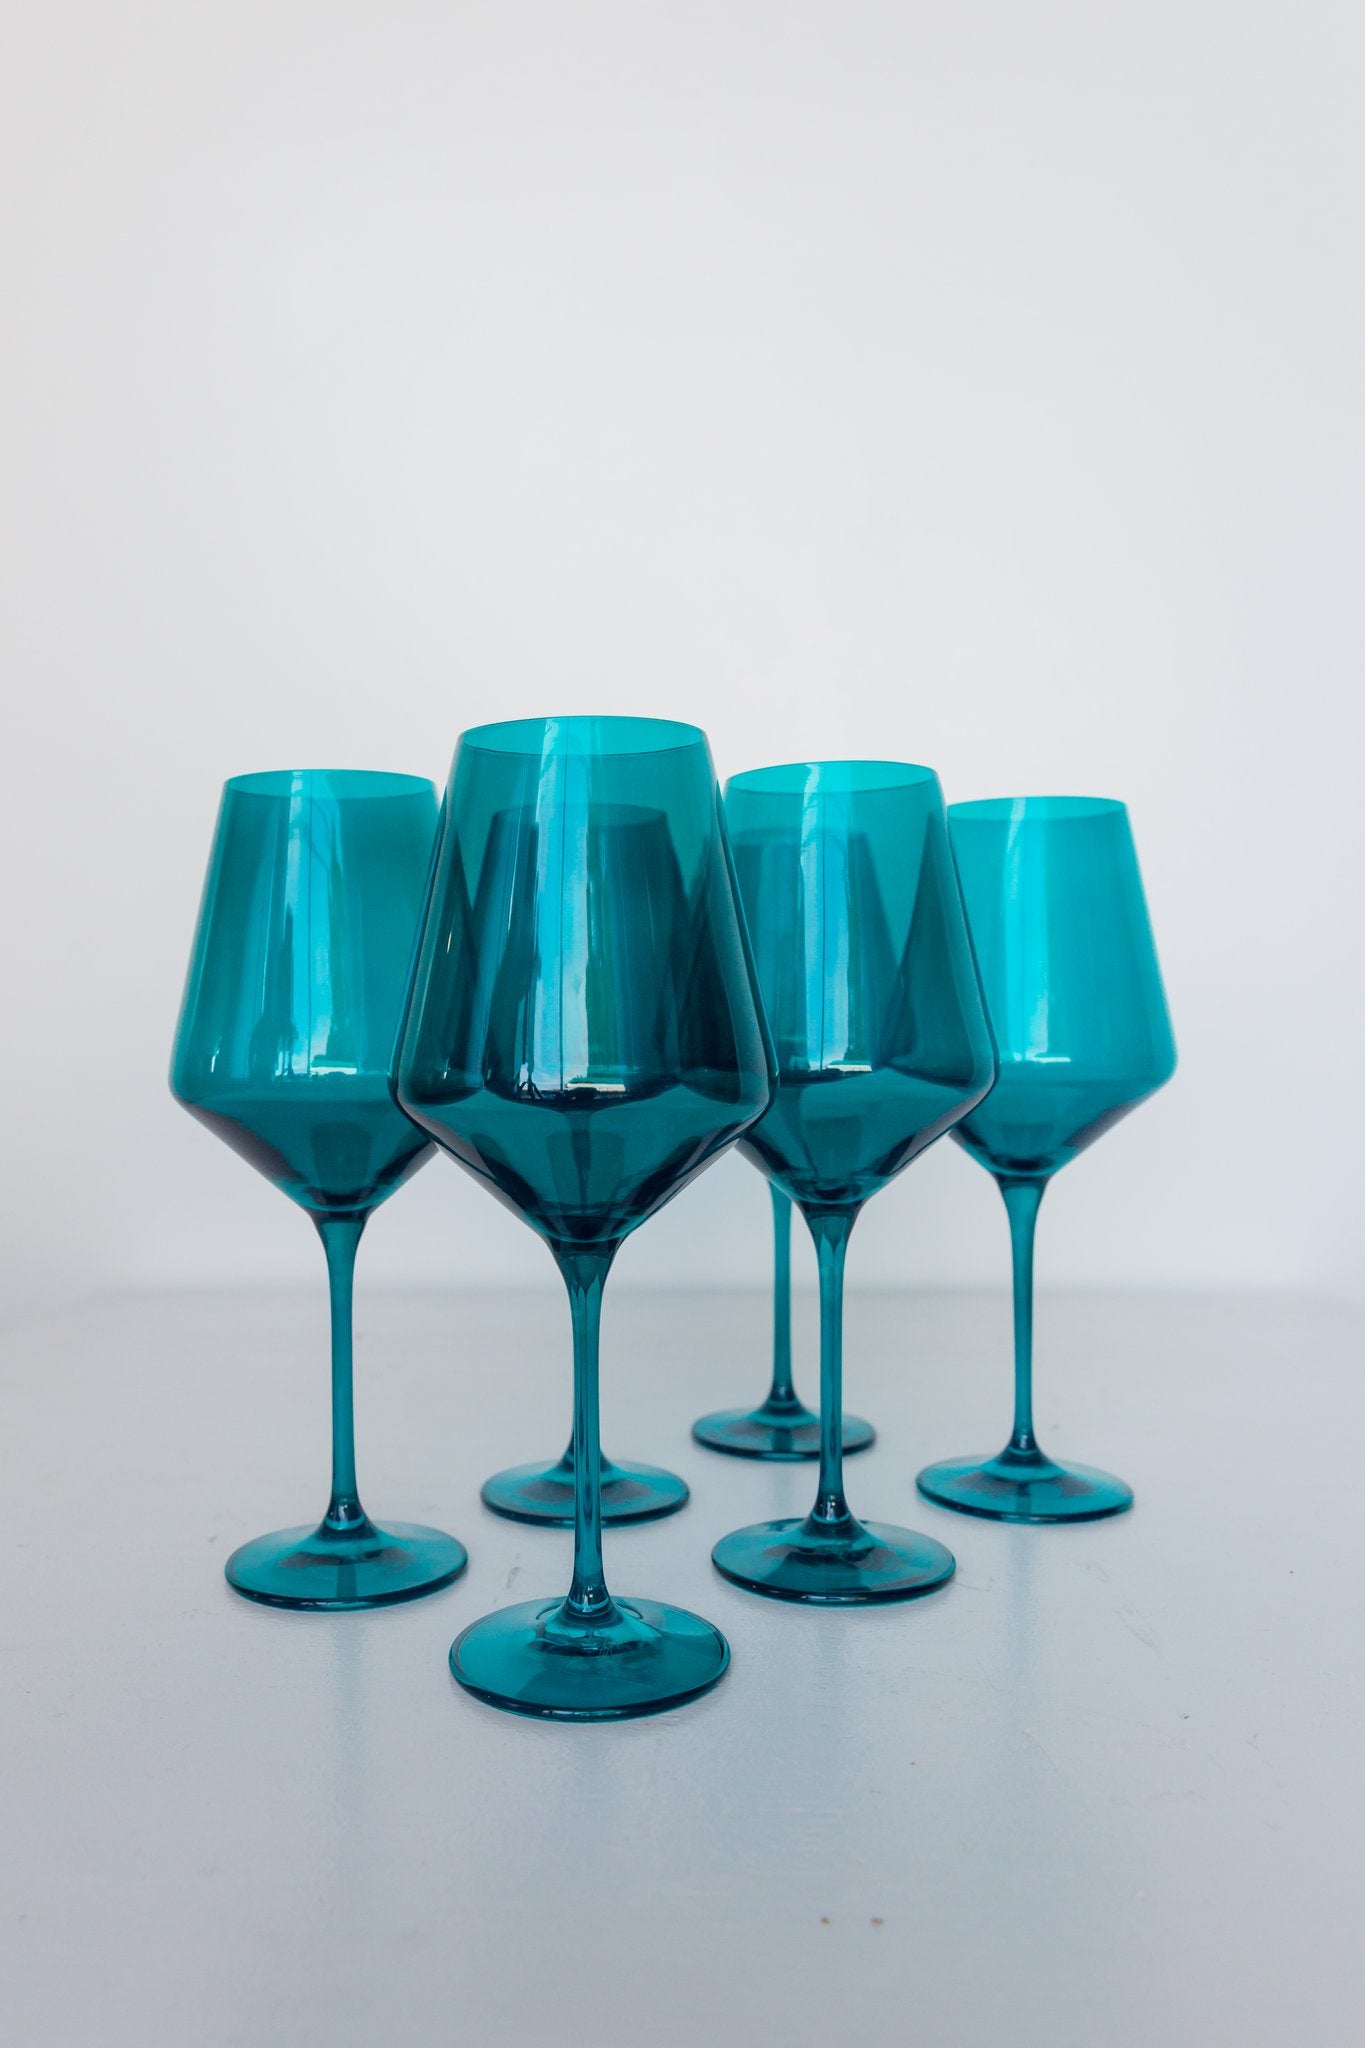 Estelle Colored Glass - Stemware Wine Glasses - Set of 6 Mint Green